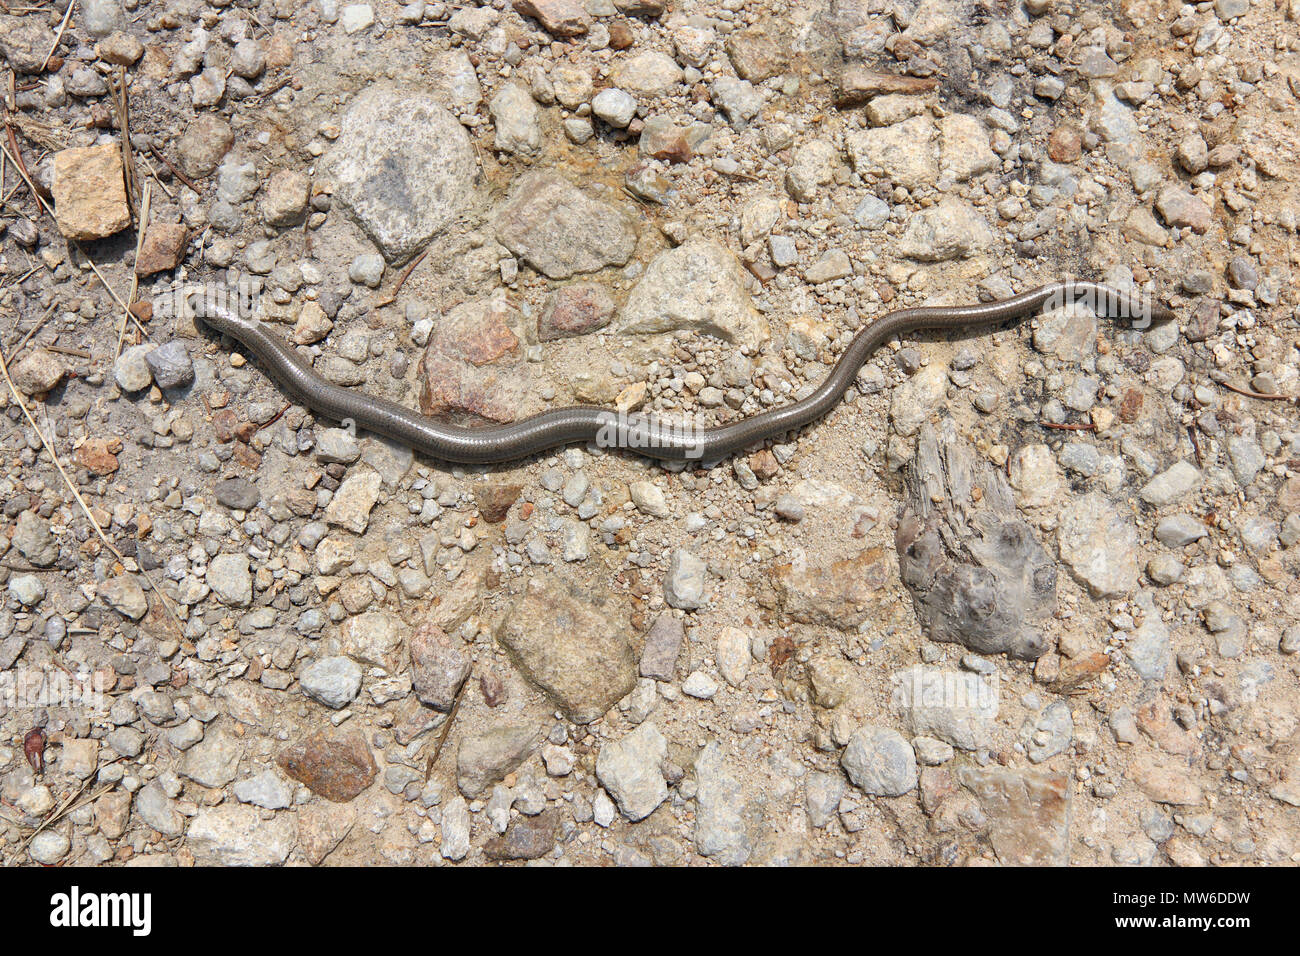 Blind worm on stony ground - detail Stock Photo